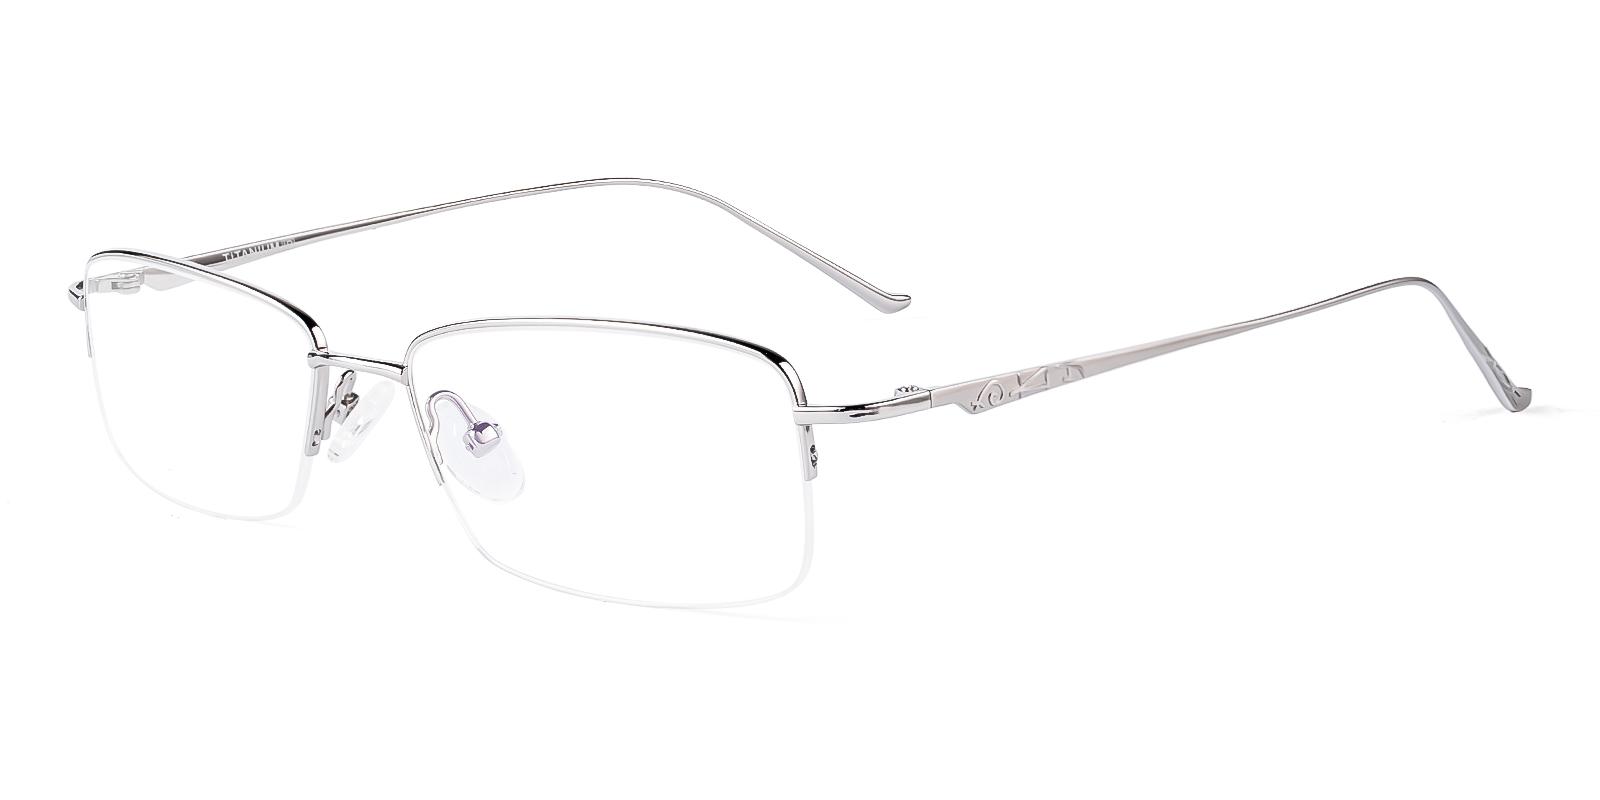 Yesior Silver Titanium Eyeglasses , NosePads Frames from ABBE Glasses